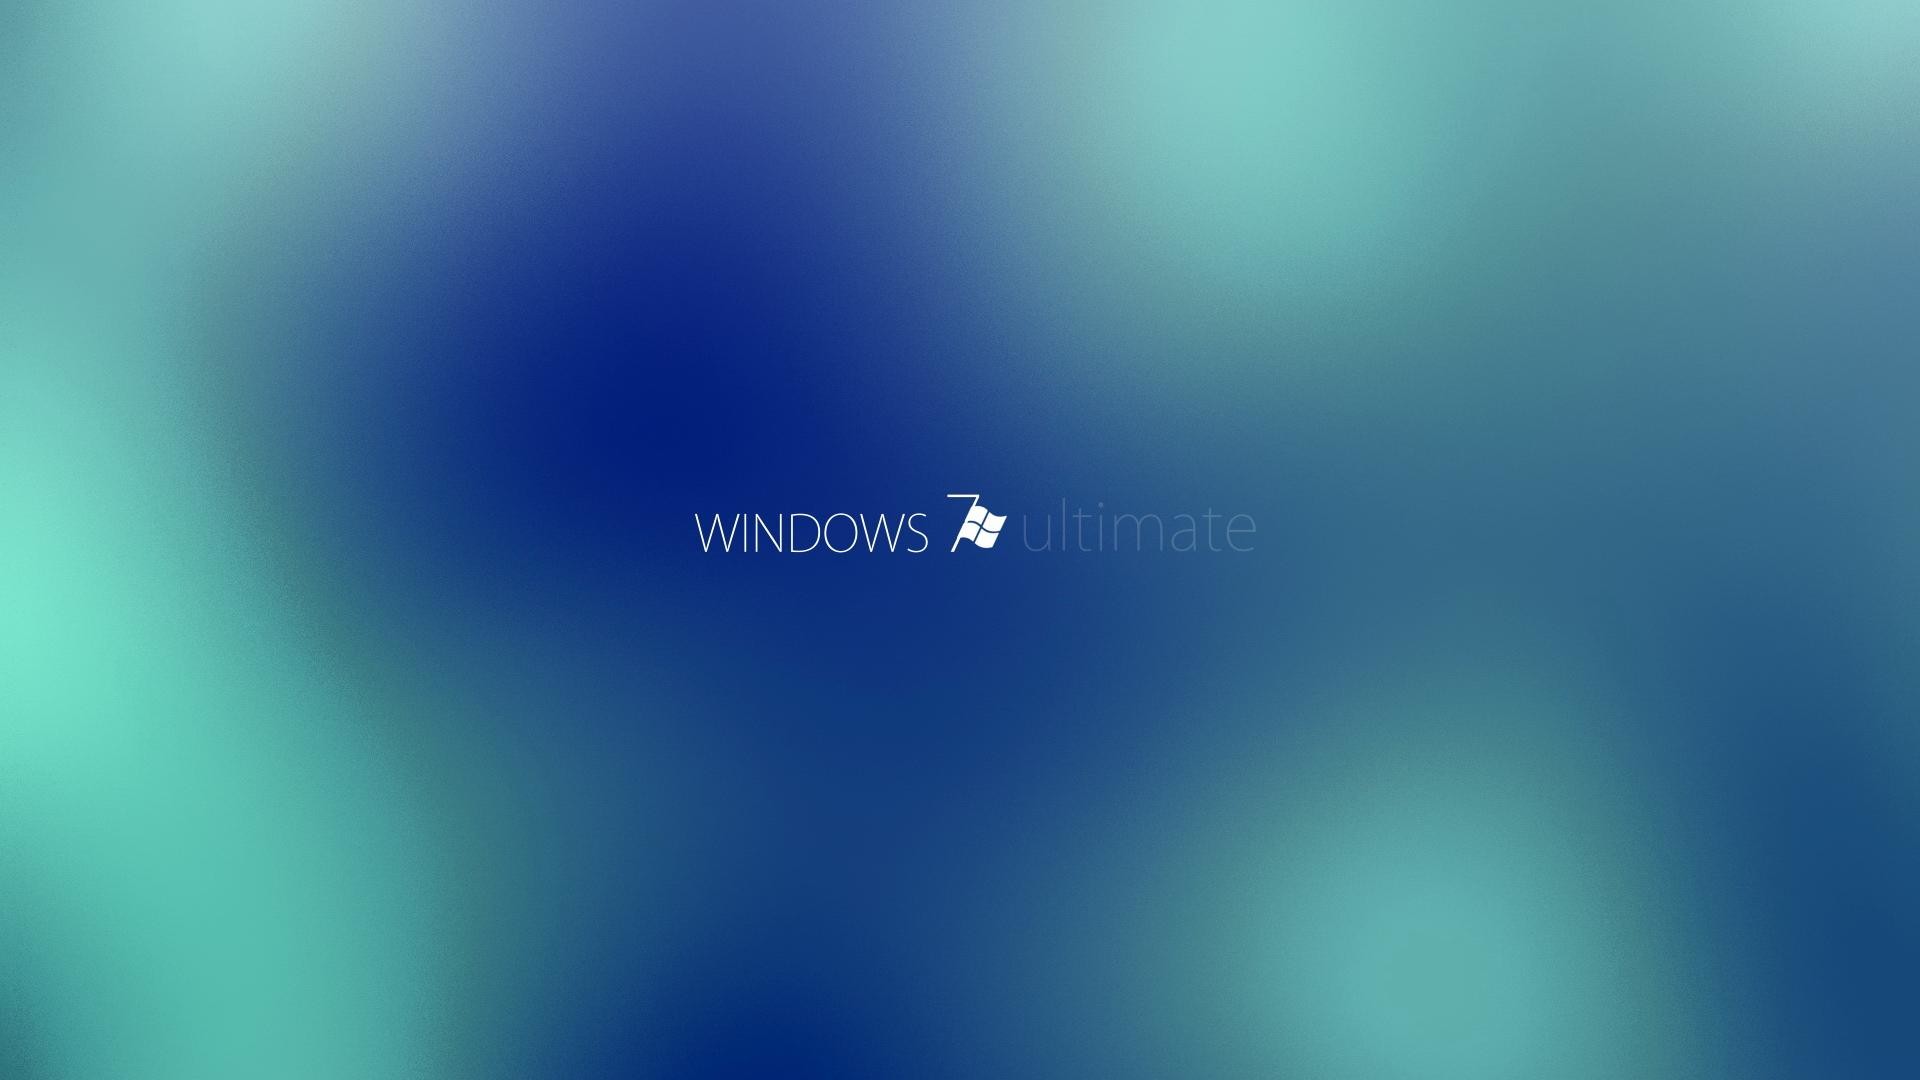 1920x1080  Cute Windows 7 ultimate desktop backgrounds wide wallpapers:1280x800,1440x900,1680x1050  -